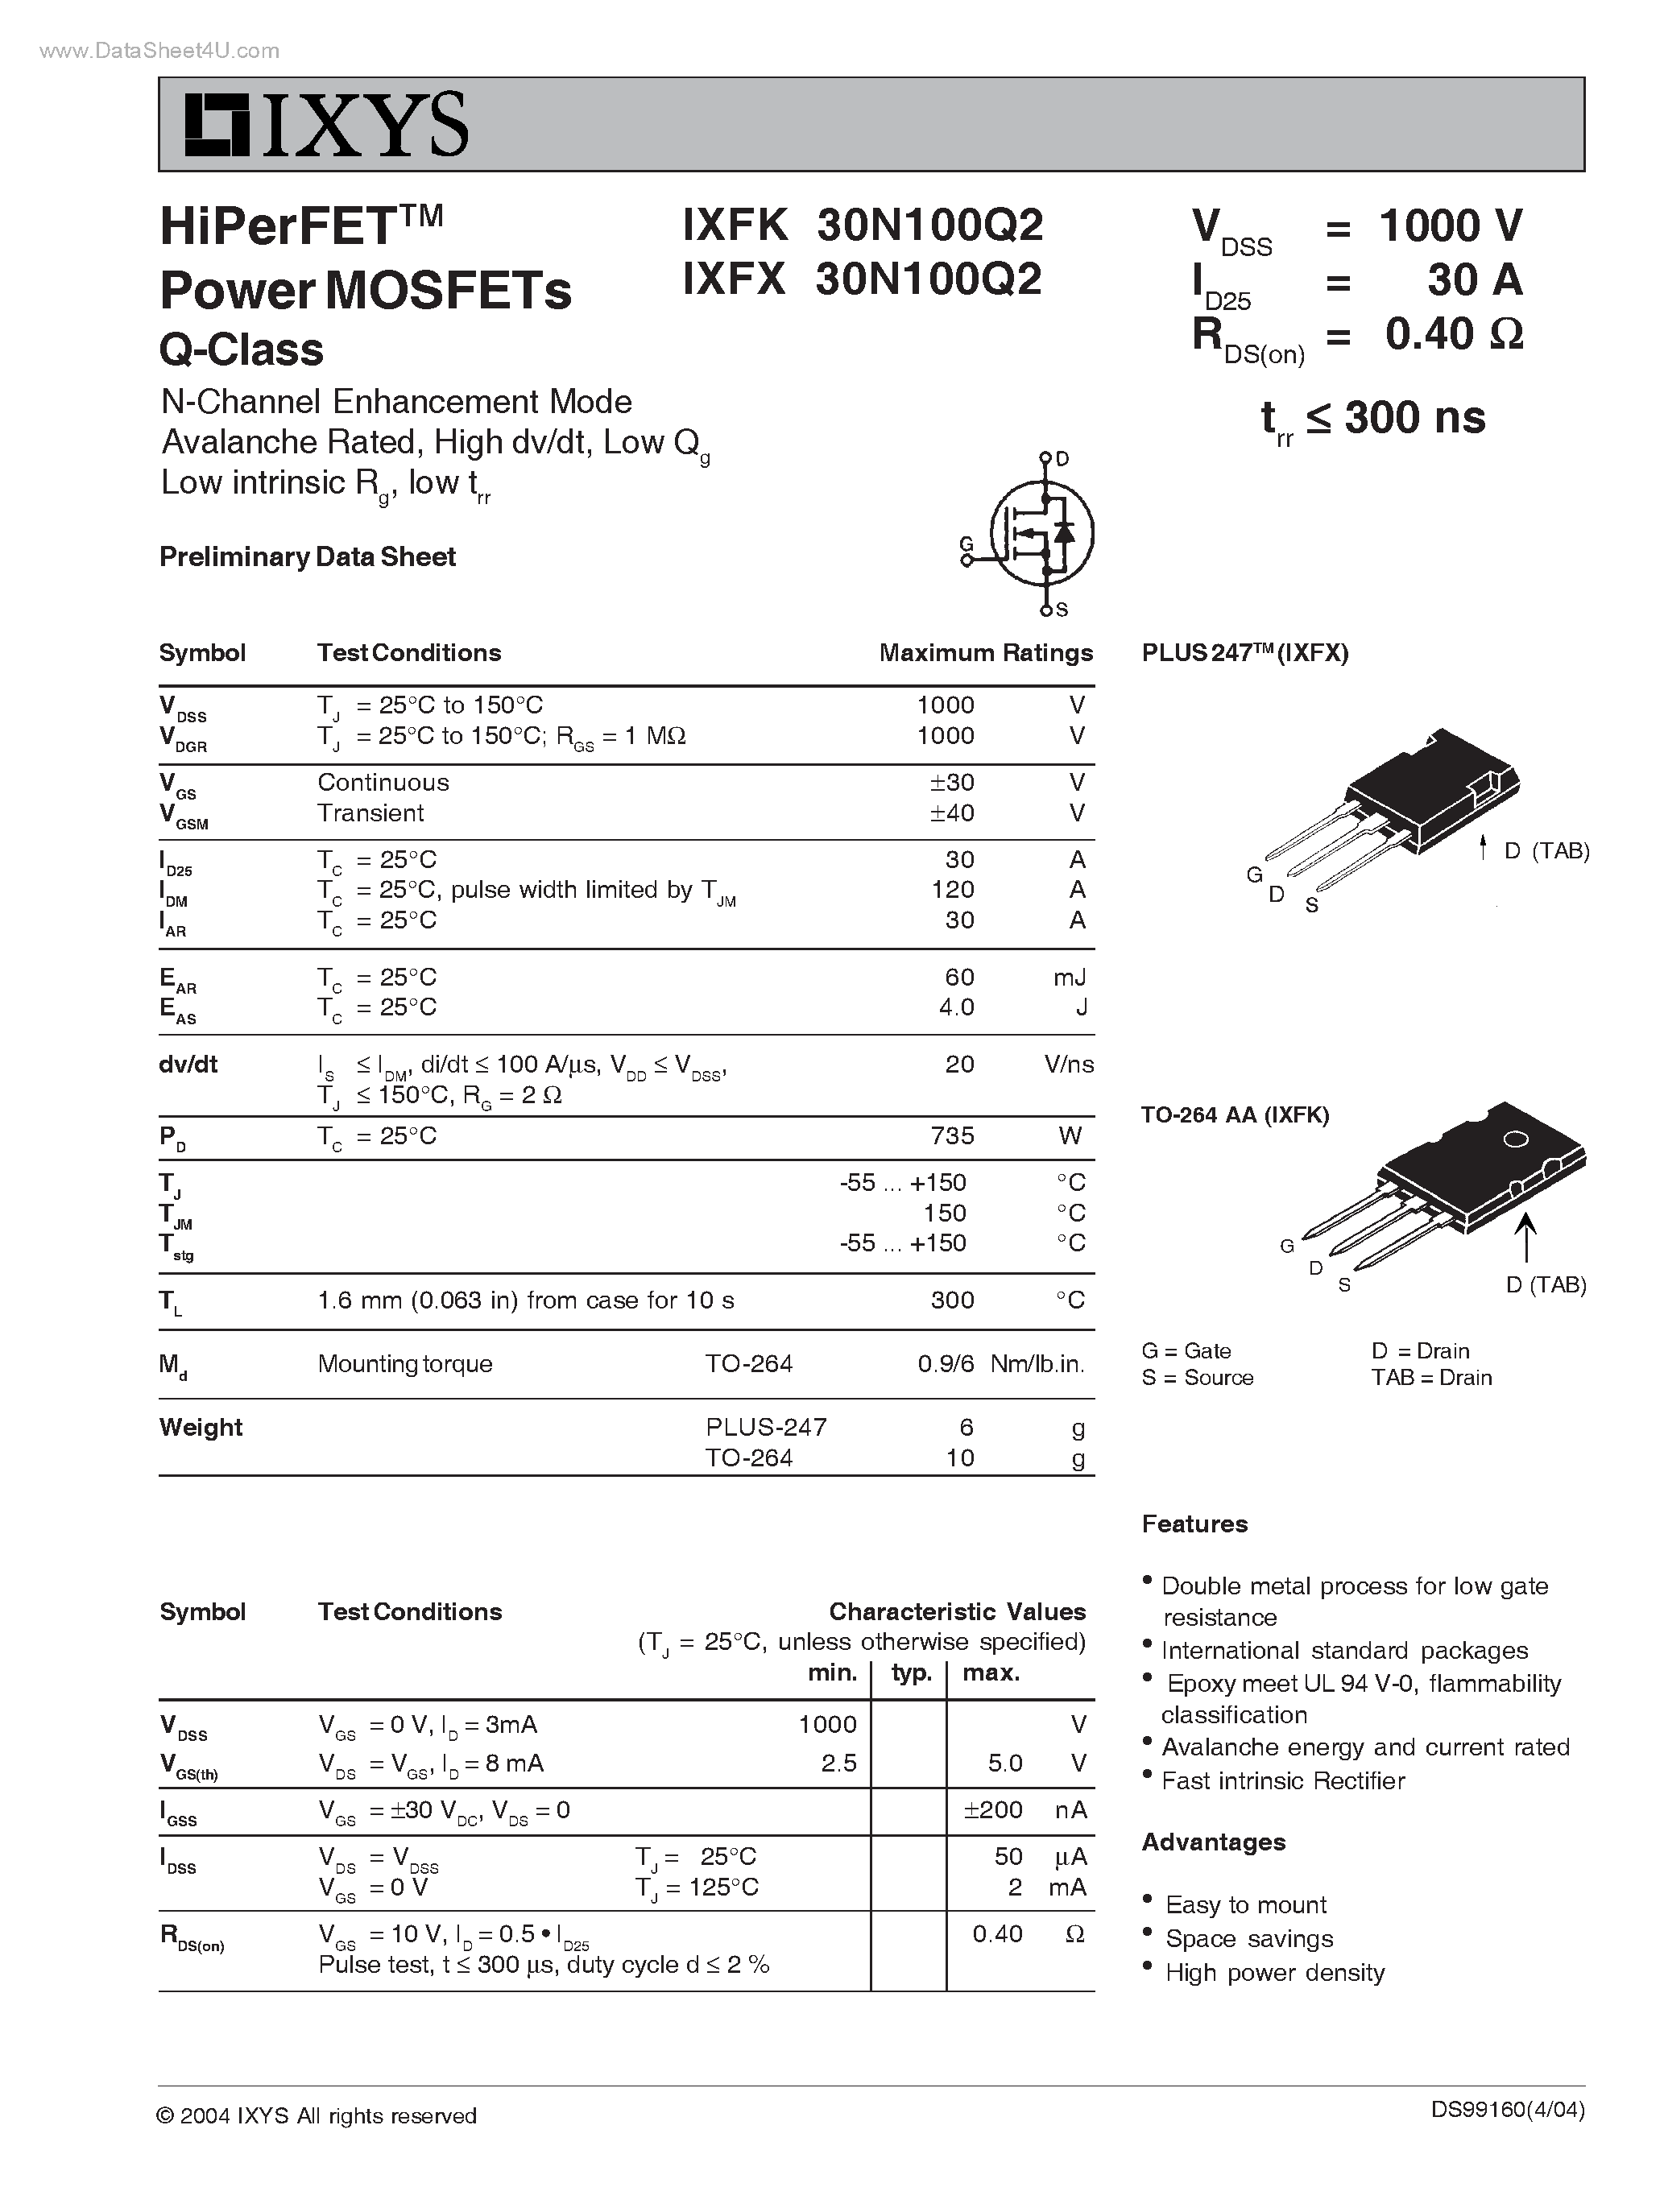 Datasheet IXFK30N100Q2 - (IXFK30N100Q2 / IXFX30N100Q2) HiPerFET Power MOSFETs Q-Class page 1